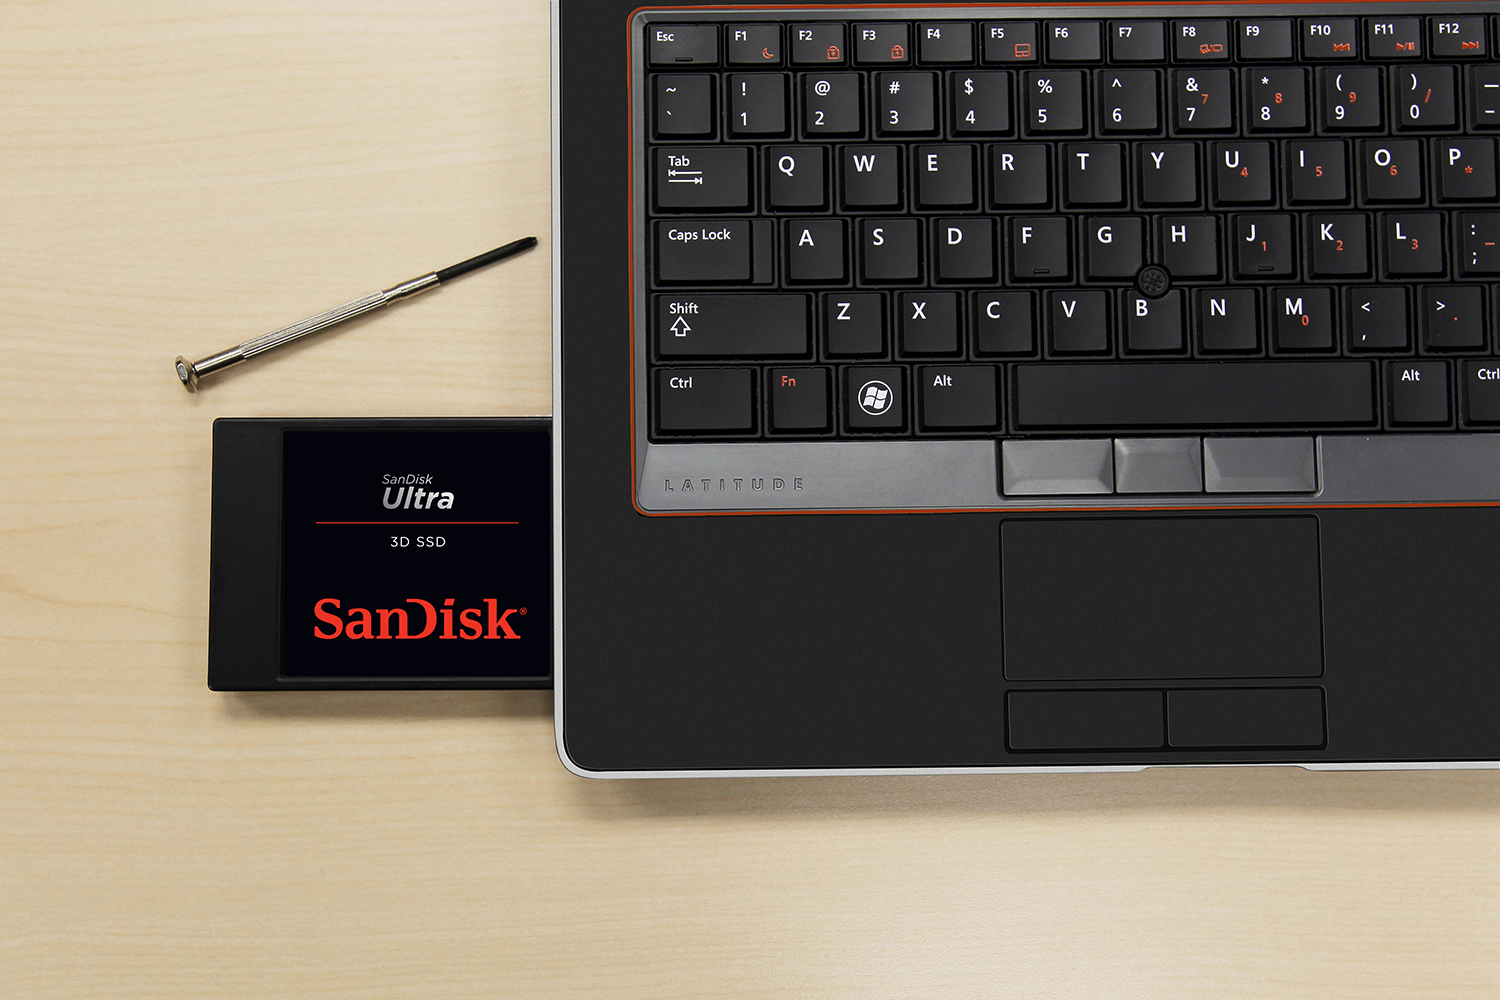 SANDISK Ultra® 3D Solid Speicher, SATA Zoll, 2,5 6 Gbps, State intern SSD GB 512 Drive